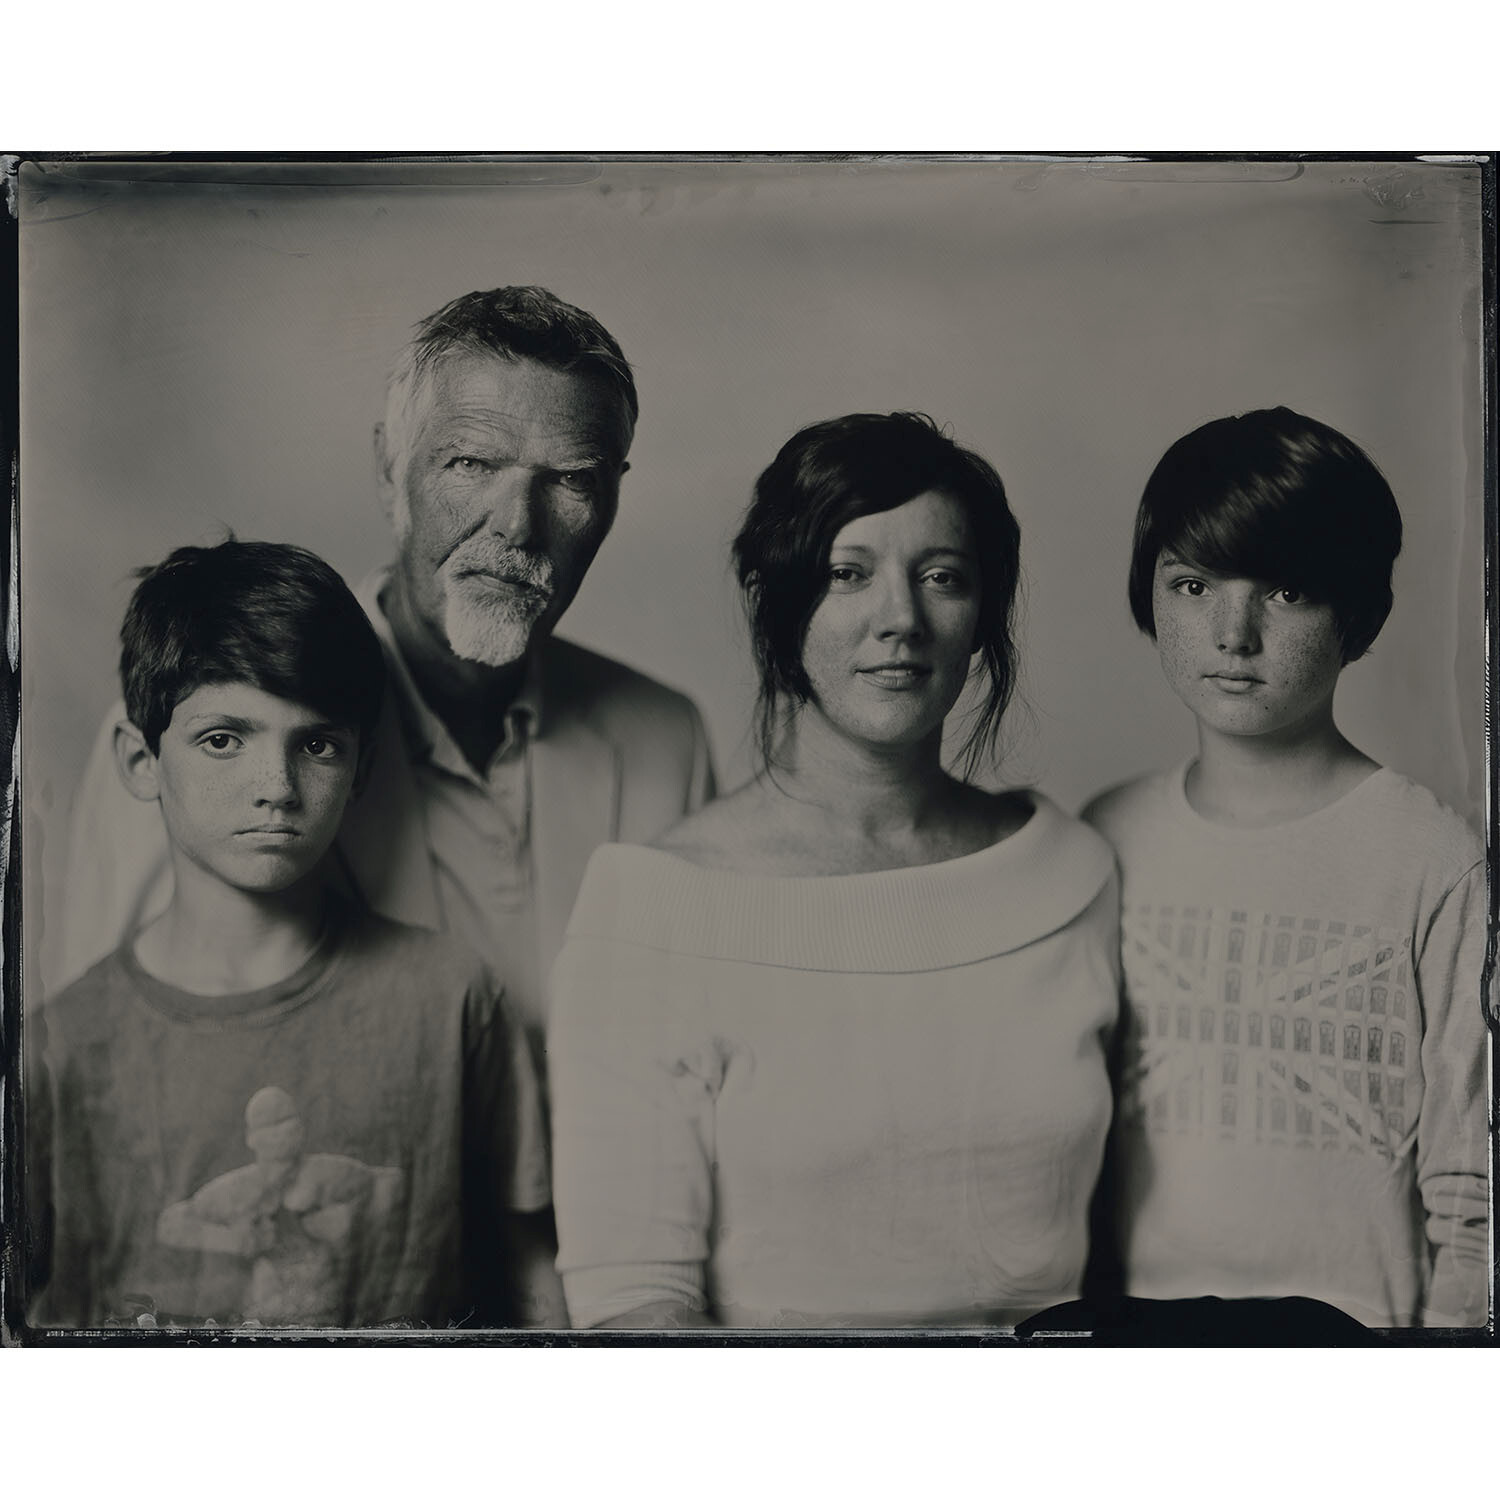 Leslie, Stuart, Charlie & Alec-Silver Portrait Store-scan from Wet plate collodion-Tintype 20 x 25 cm.